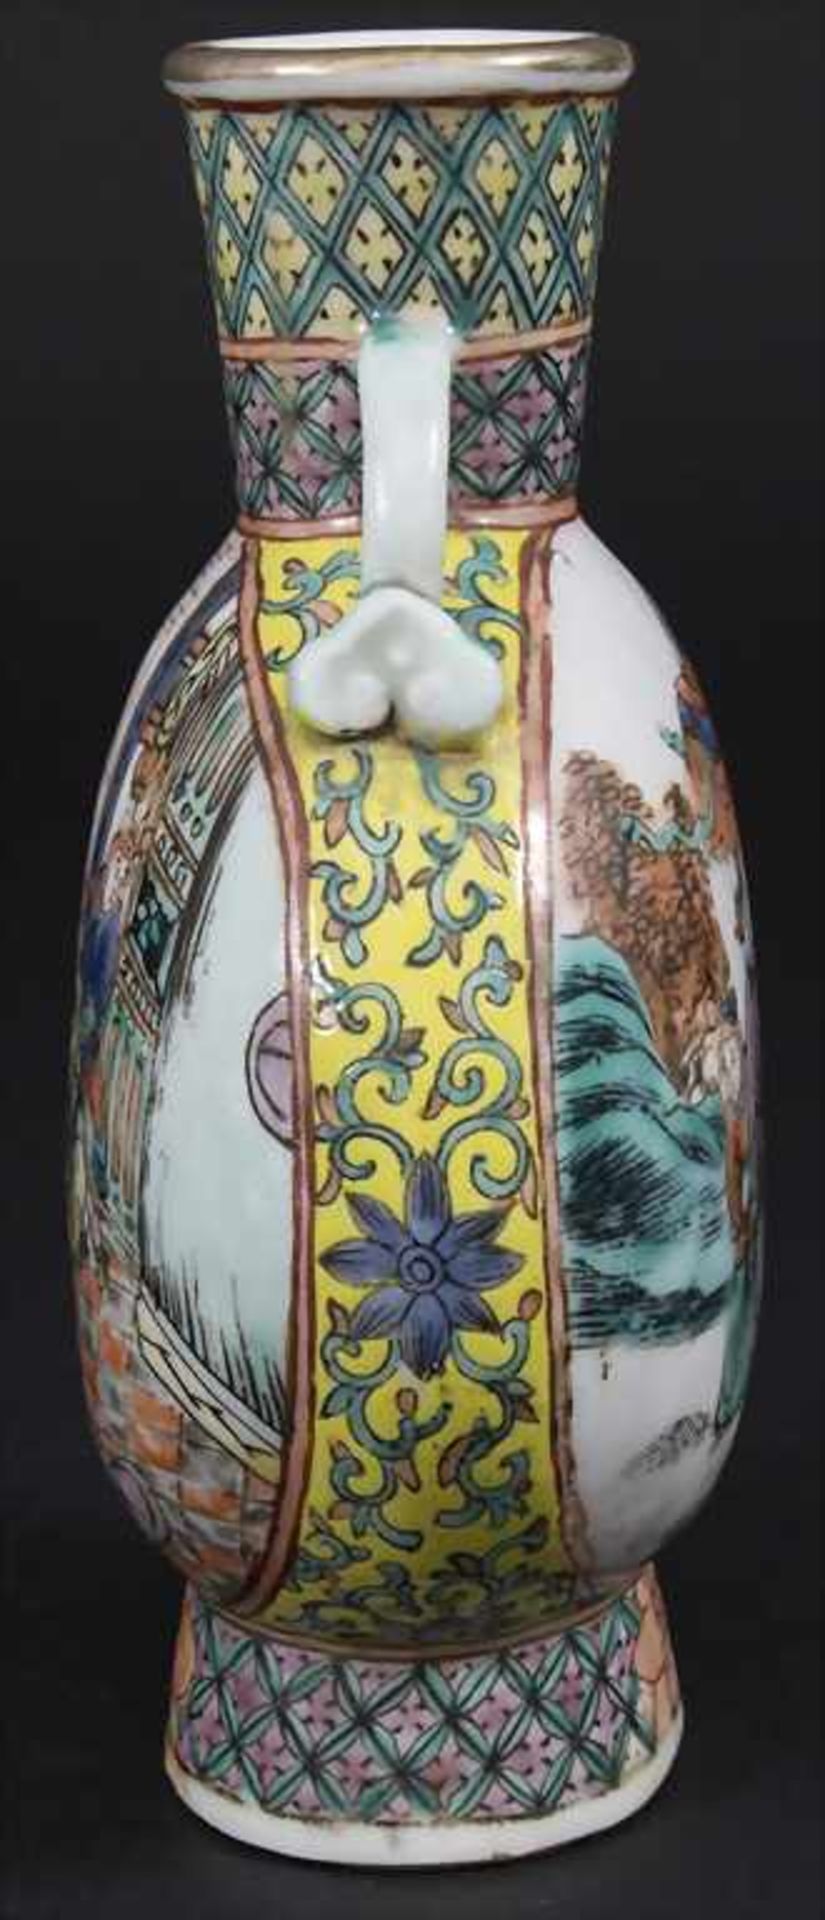 Porzellan-Ziervase / A porcelain decorative vase, China, Qing-Dynastie (1644-1911) - Image 4 of 9